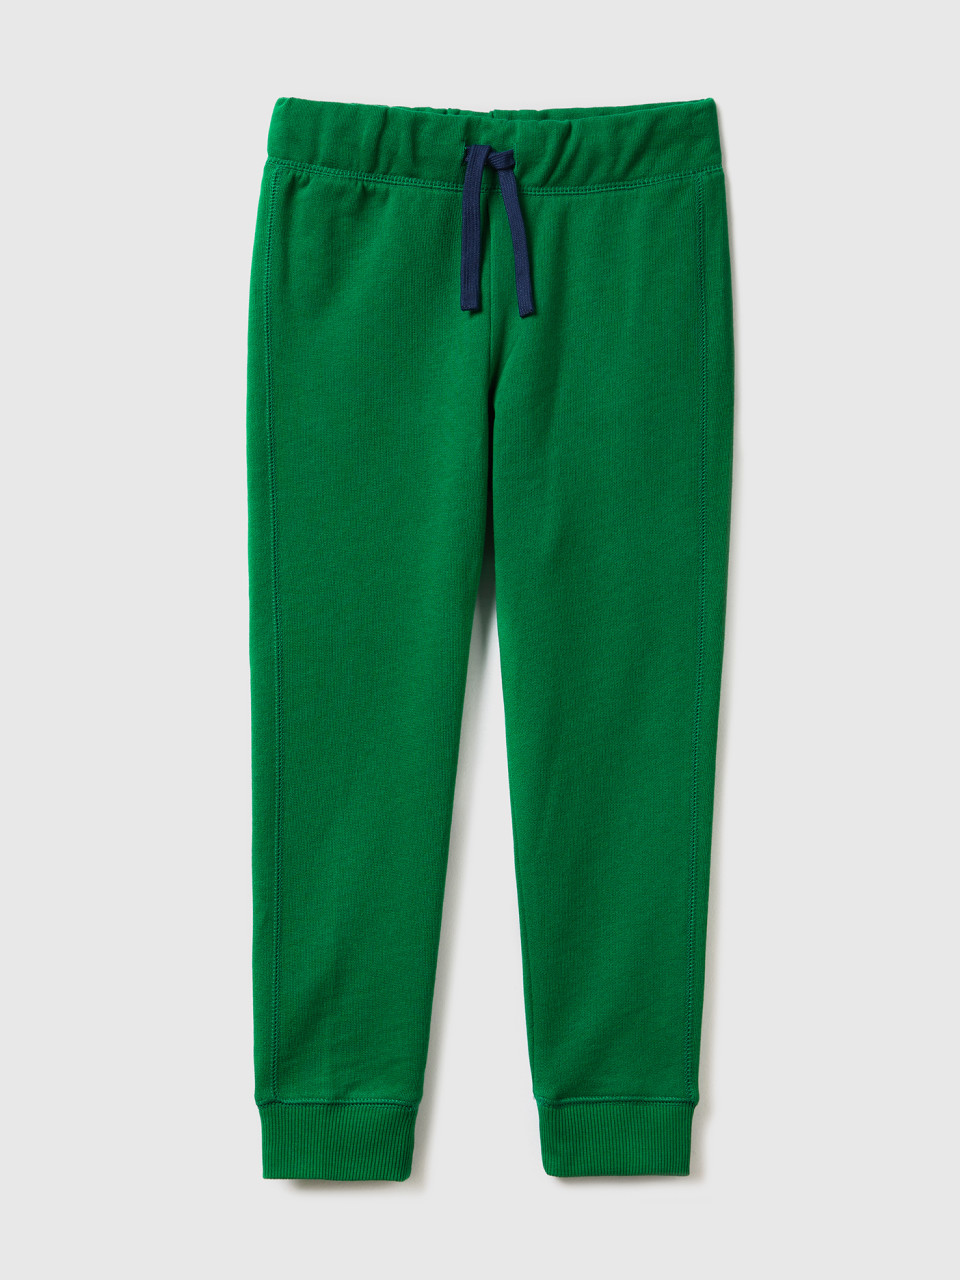 Benetton, 100% Cotton Sweatpants, Green, Kids